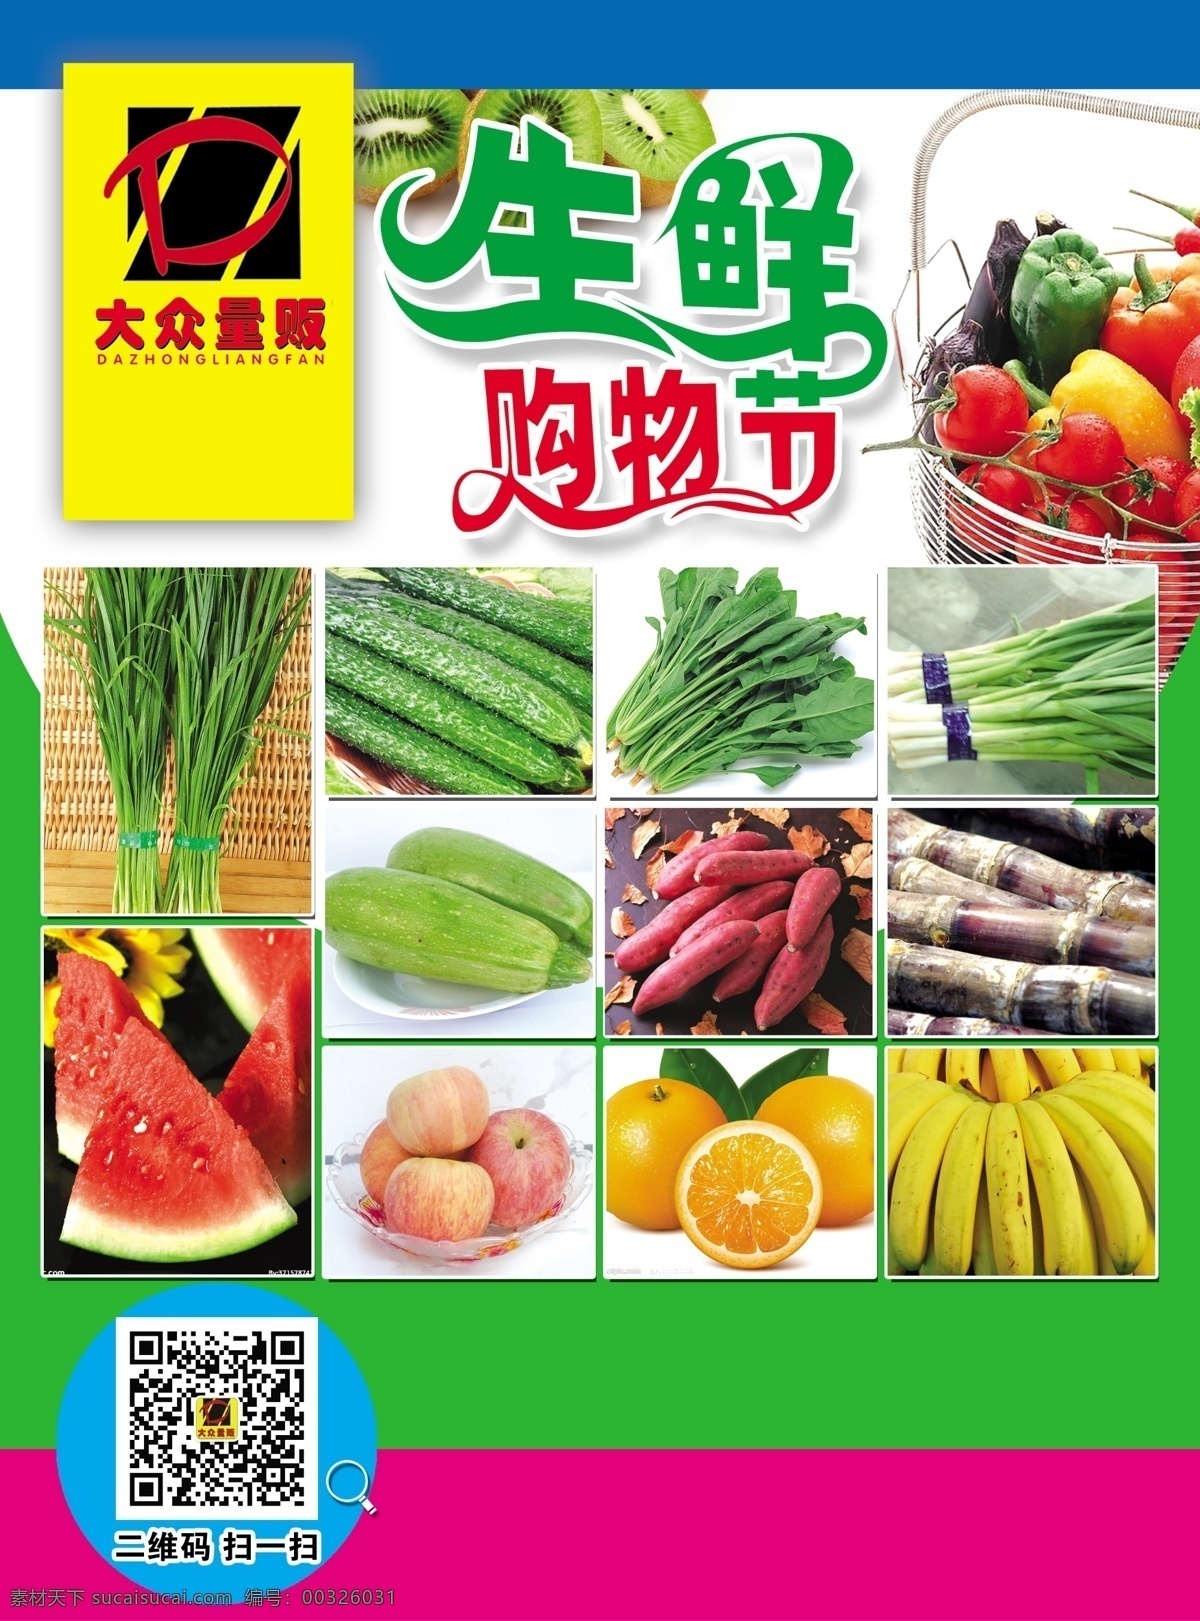 dm宣传单 超市dm 橙子 广告设计模板 生鲜 生鲜dm 蔬菜图 水果蔬菜 生鲜购物节 香蕉 西瓜 源文件 风景 生活 旅游餐饮